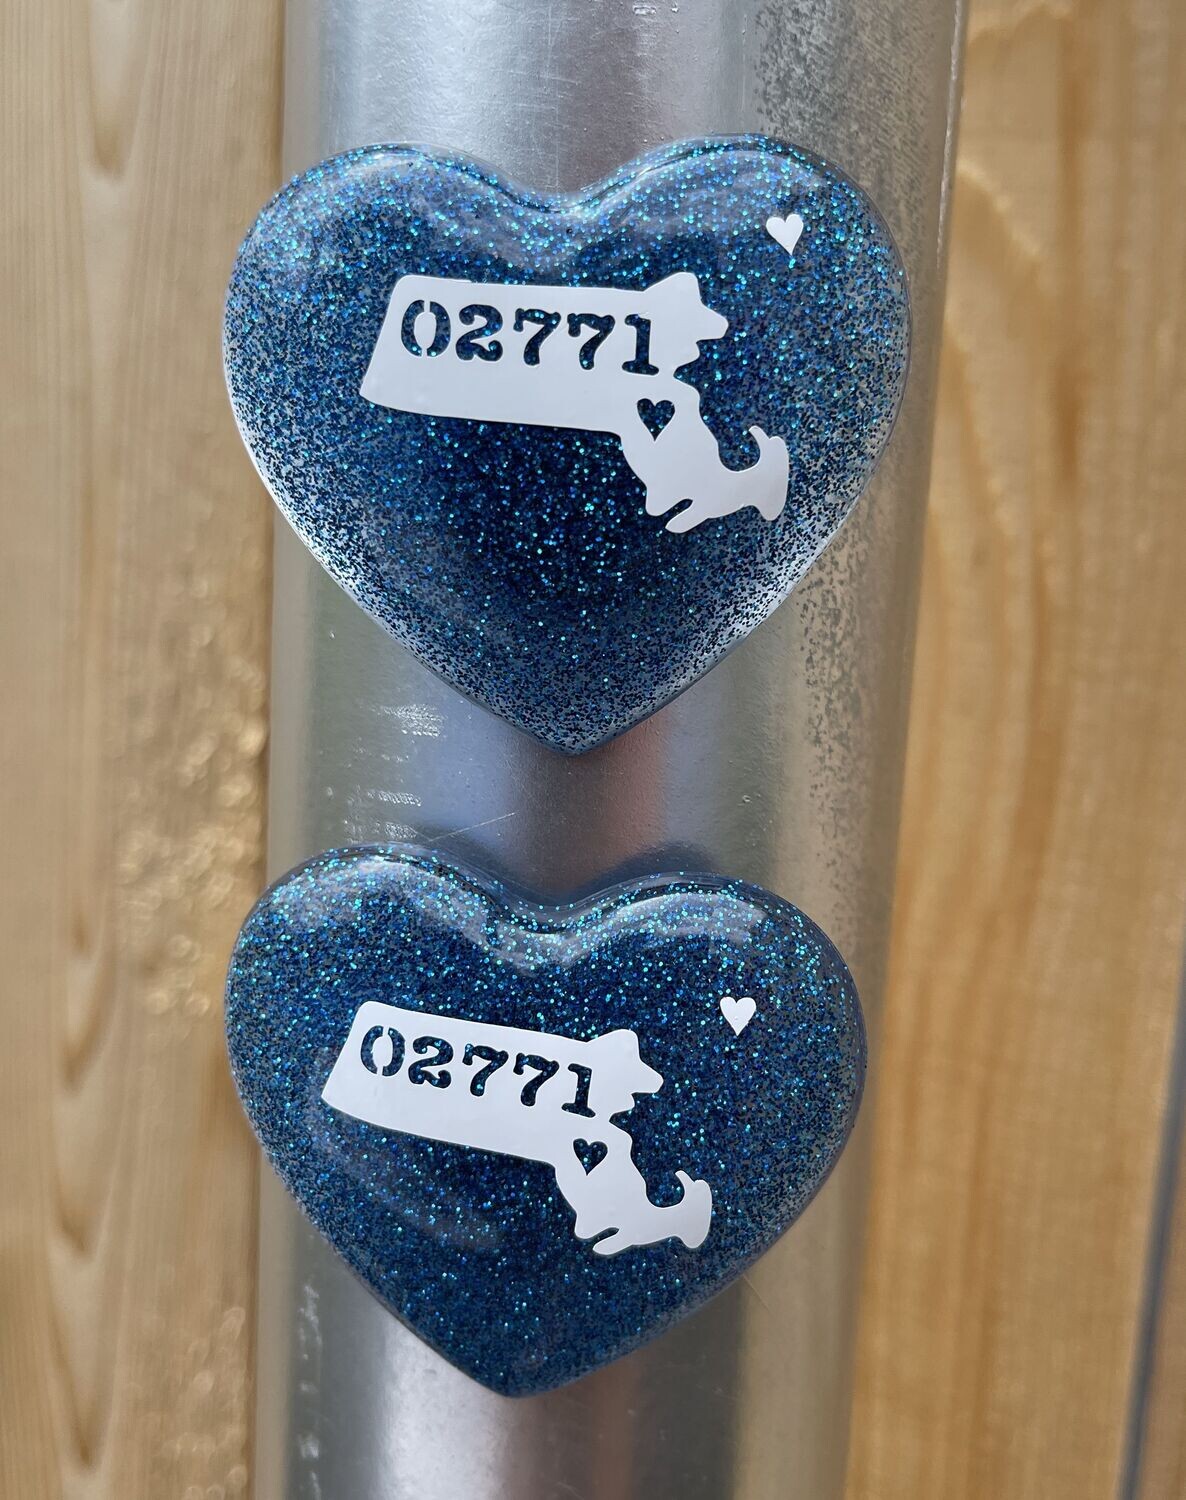 Heart Magnets - 02771 Blue Glitter